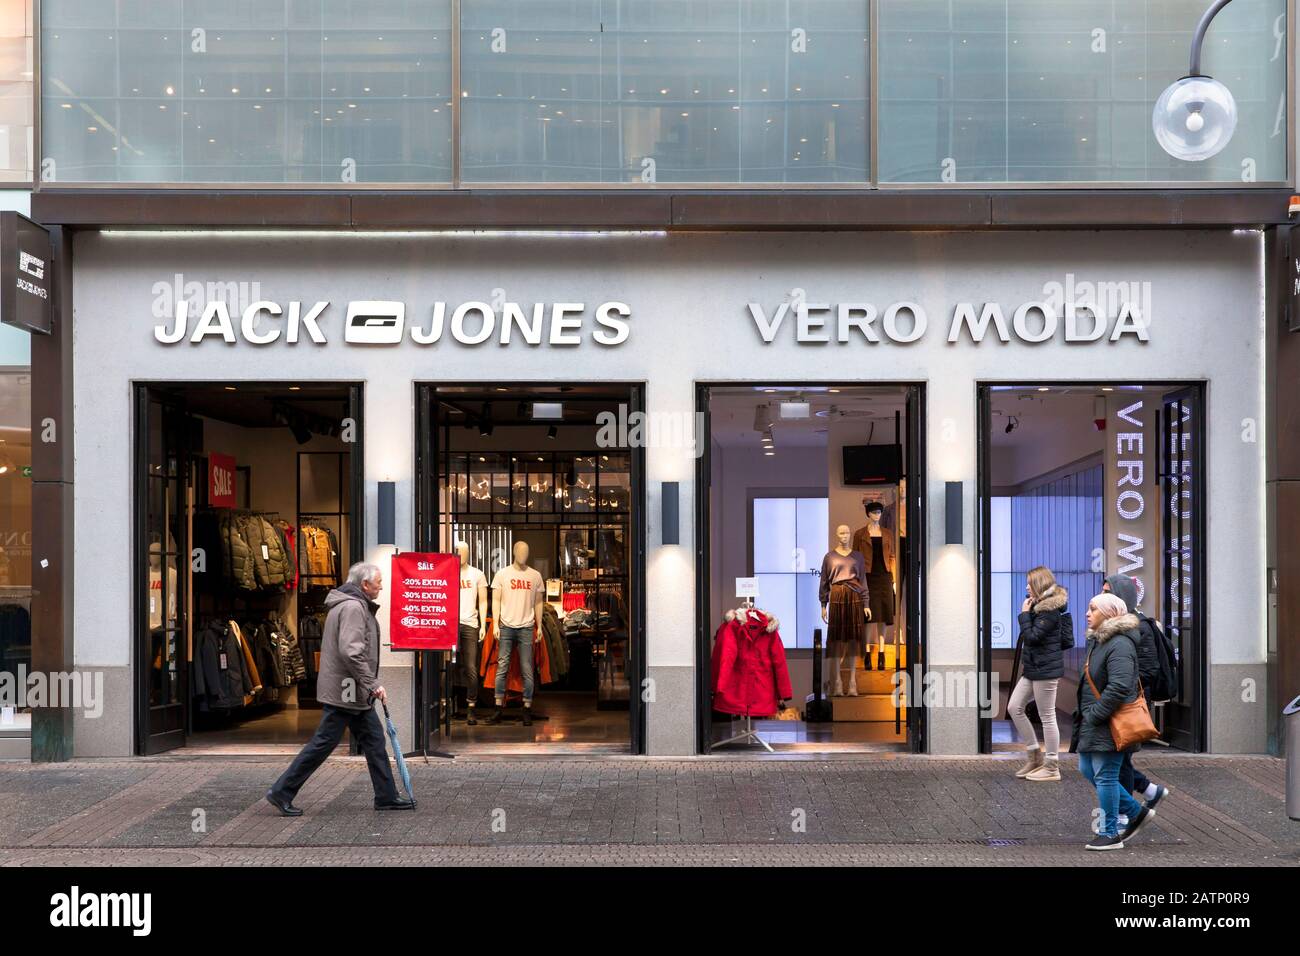 Vero Moda Jack Jones Store High Resolution Stock Photography - Alamy